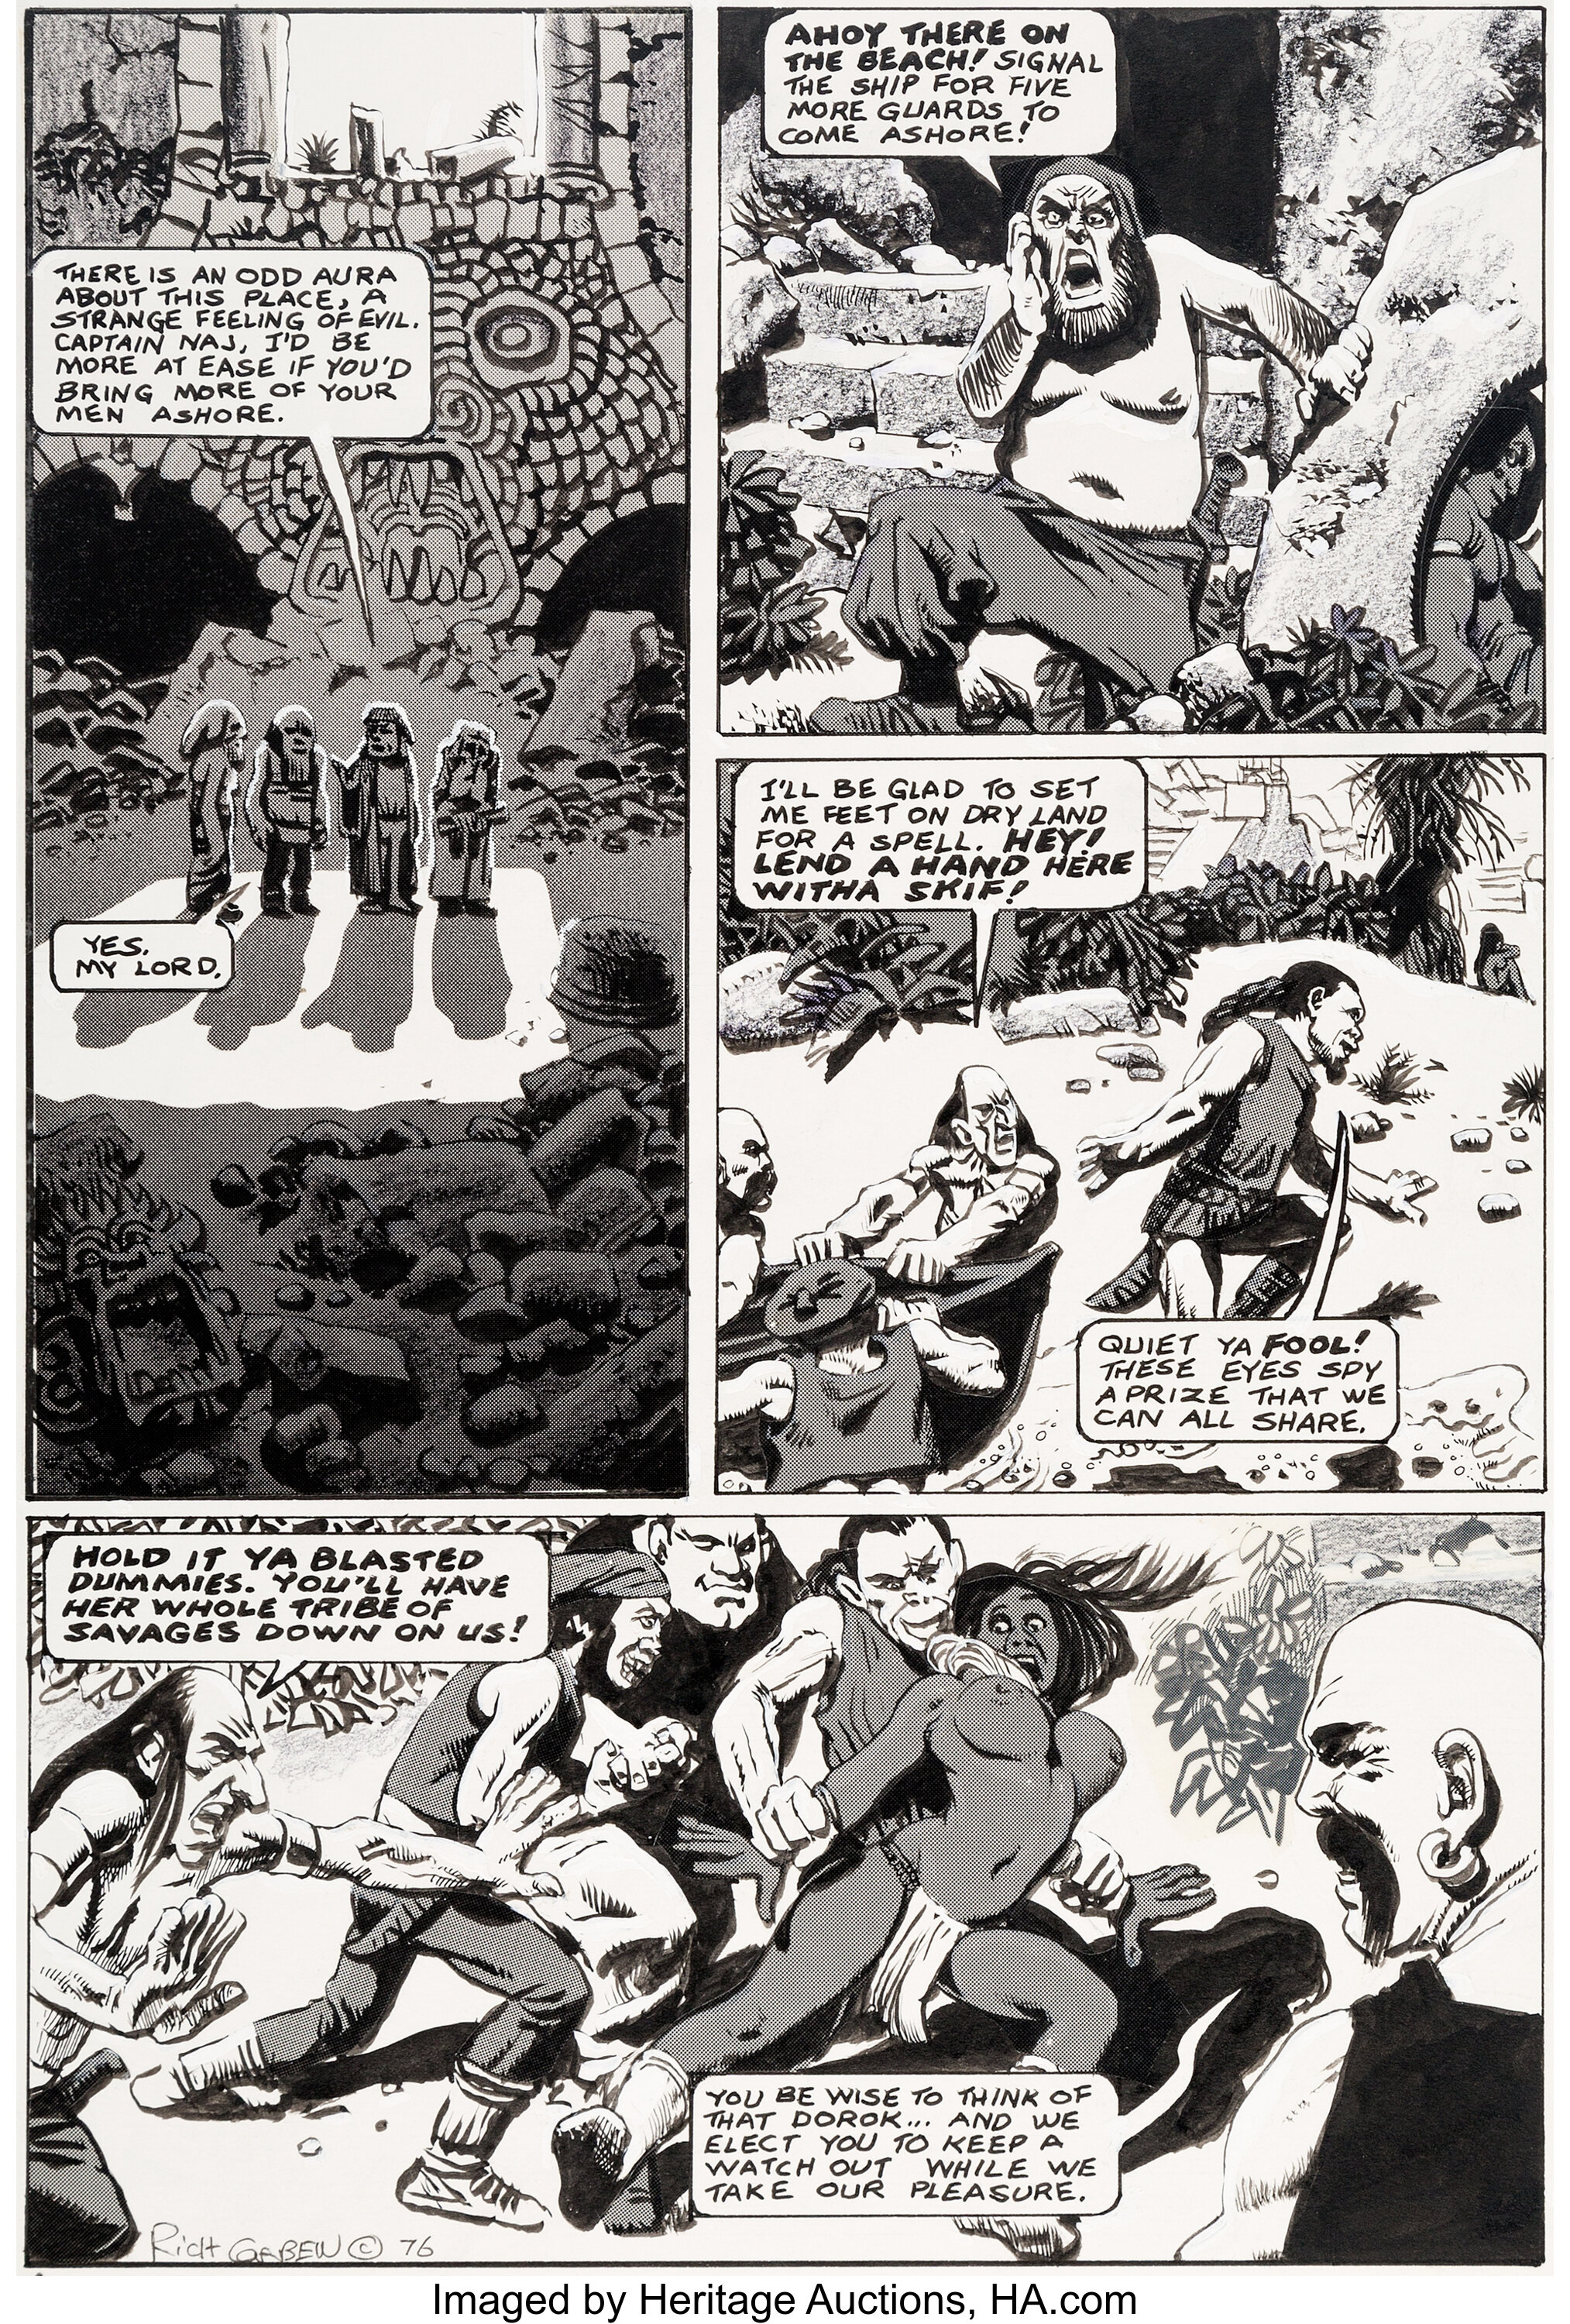 Richard Corben Hot Stuf' #3 Story Page 4 Original Art (Sal | Lot ...